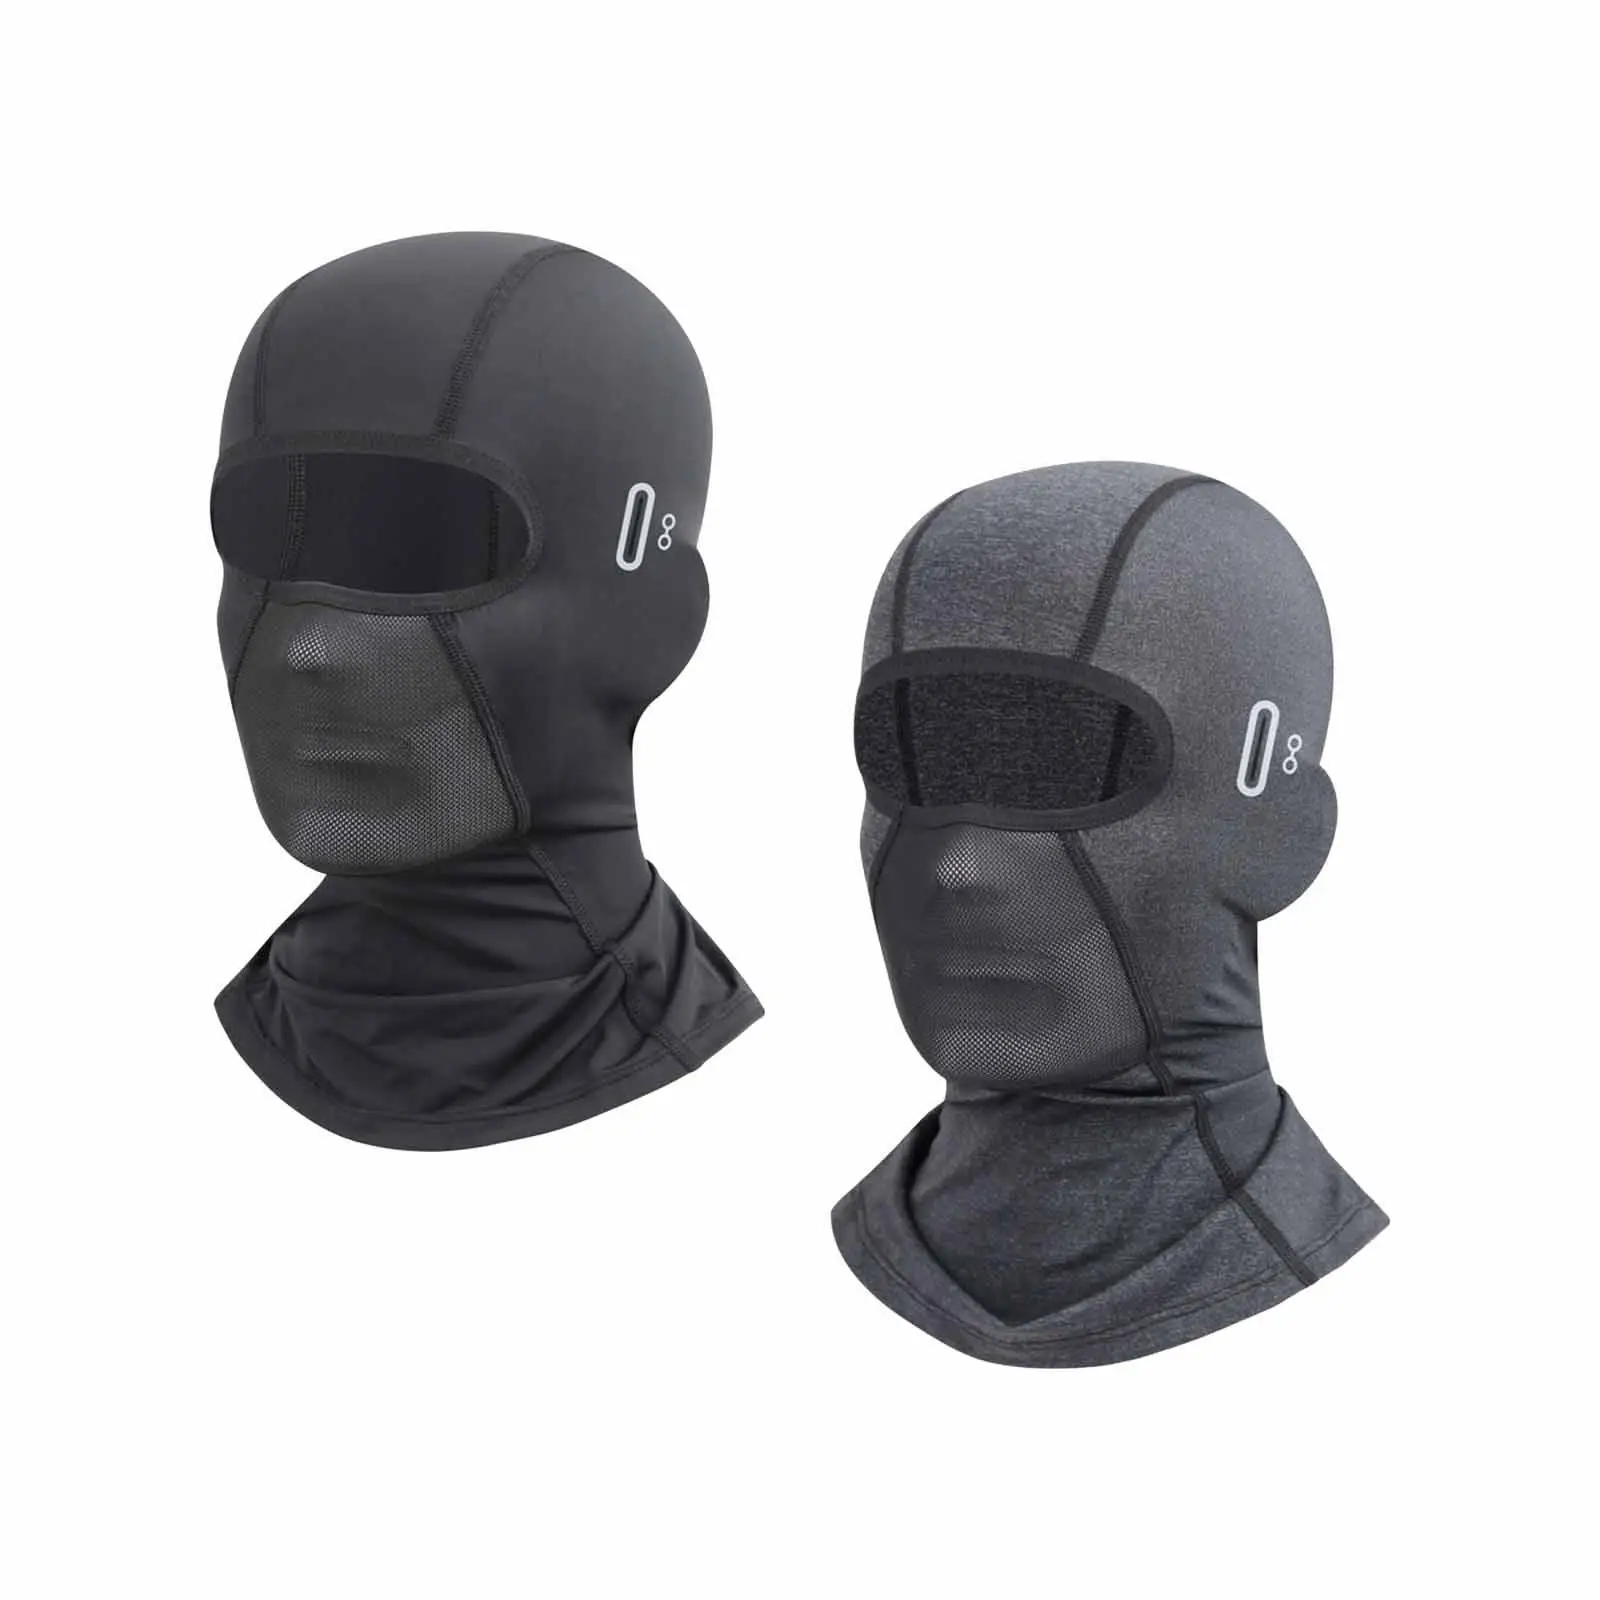 Balaclava Face Mask, Summer Cooling Neck Gaiter, Sun Protection Motorcycle Ski Scarf for Men/Women